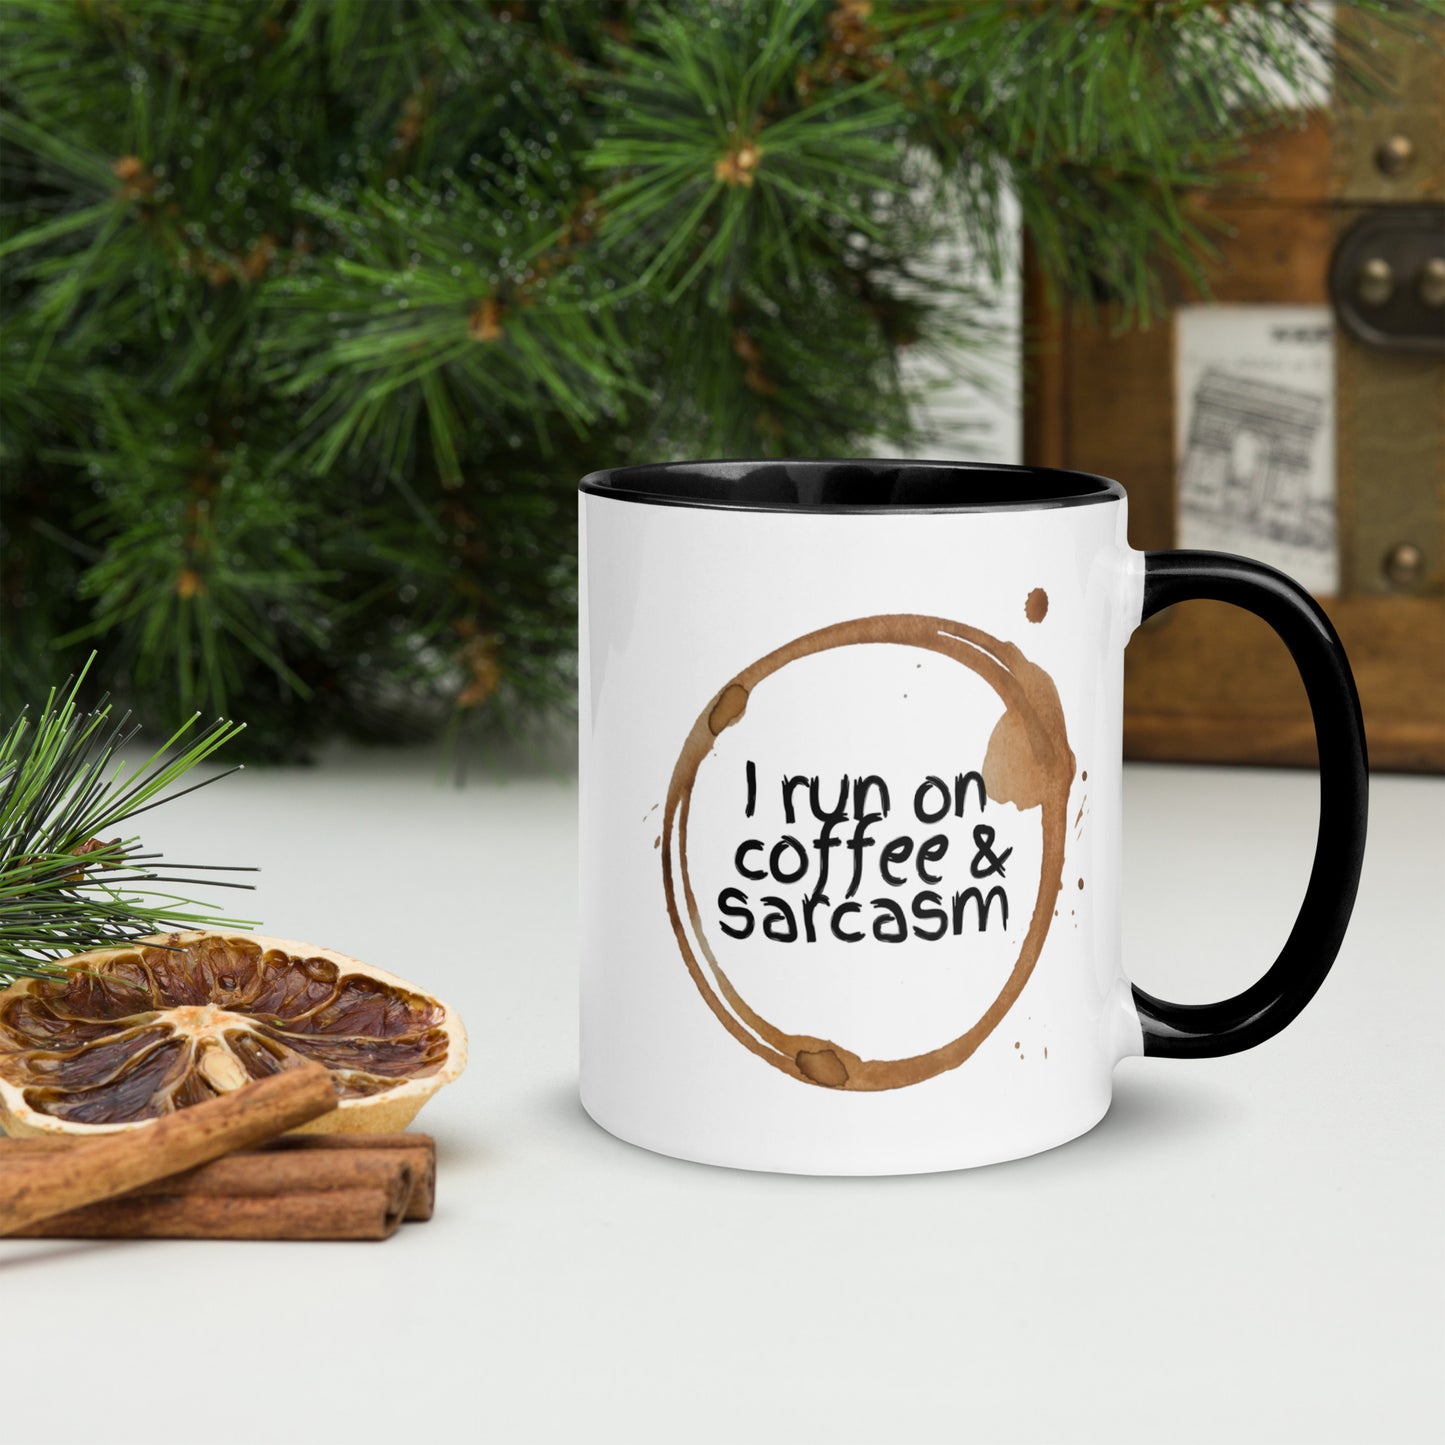 " I Run on Coffee & Sarcasm" Mug